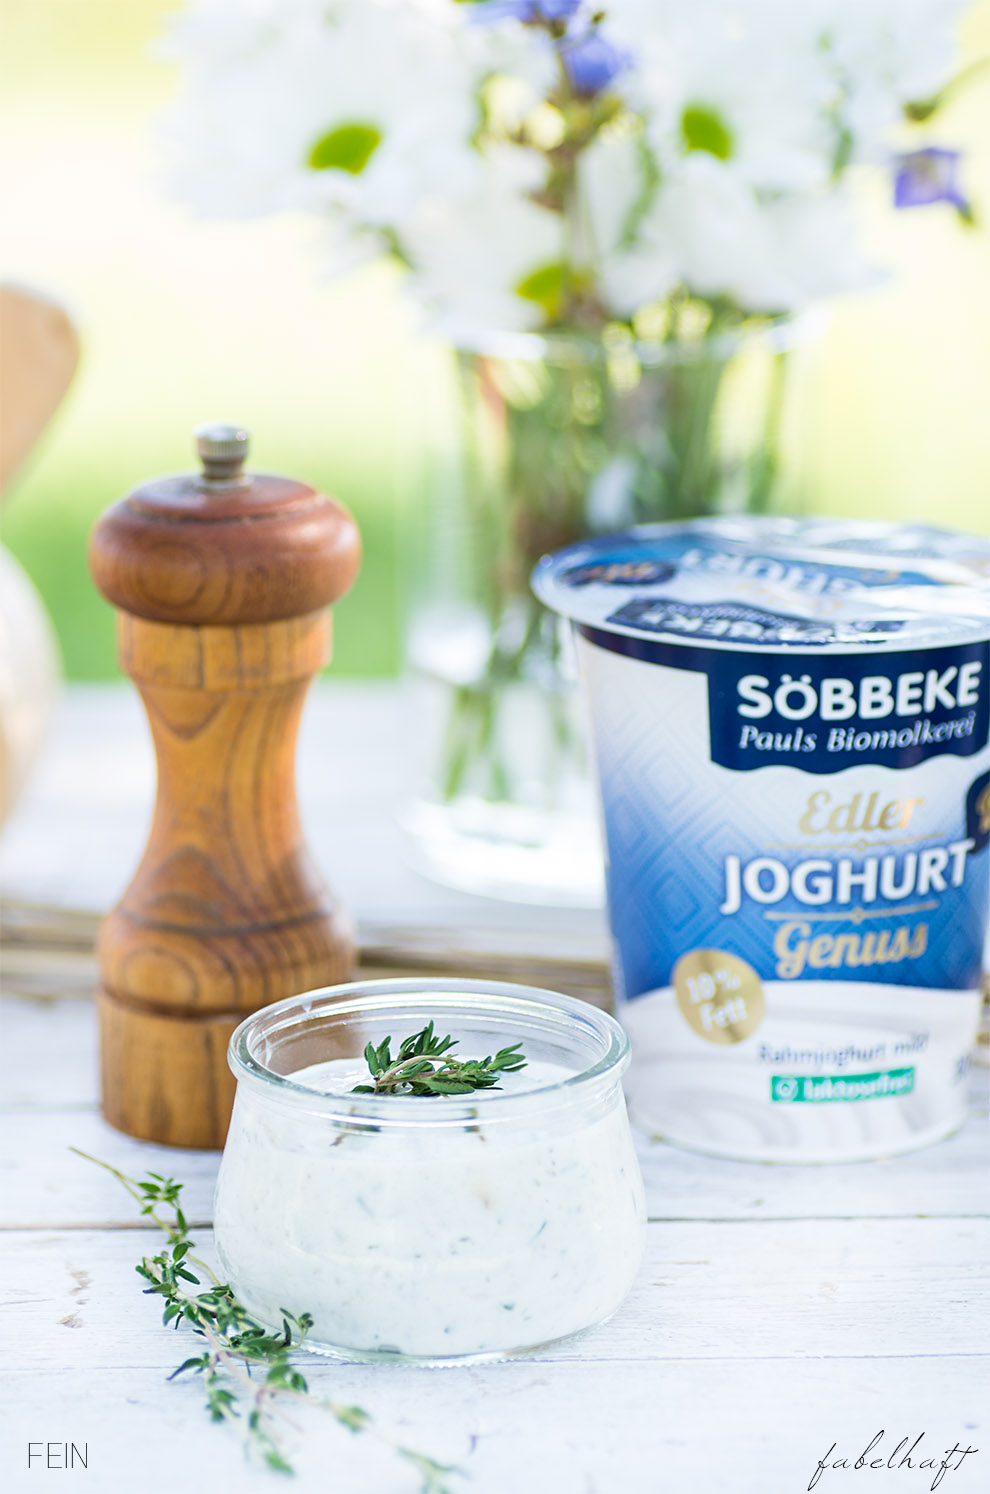 Joghurt Söbbeke Kräuter Dip